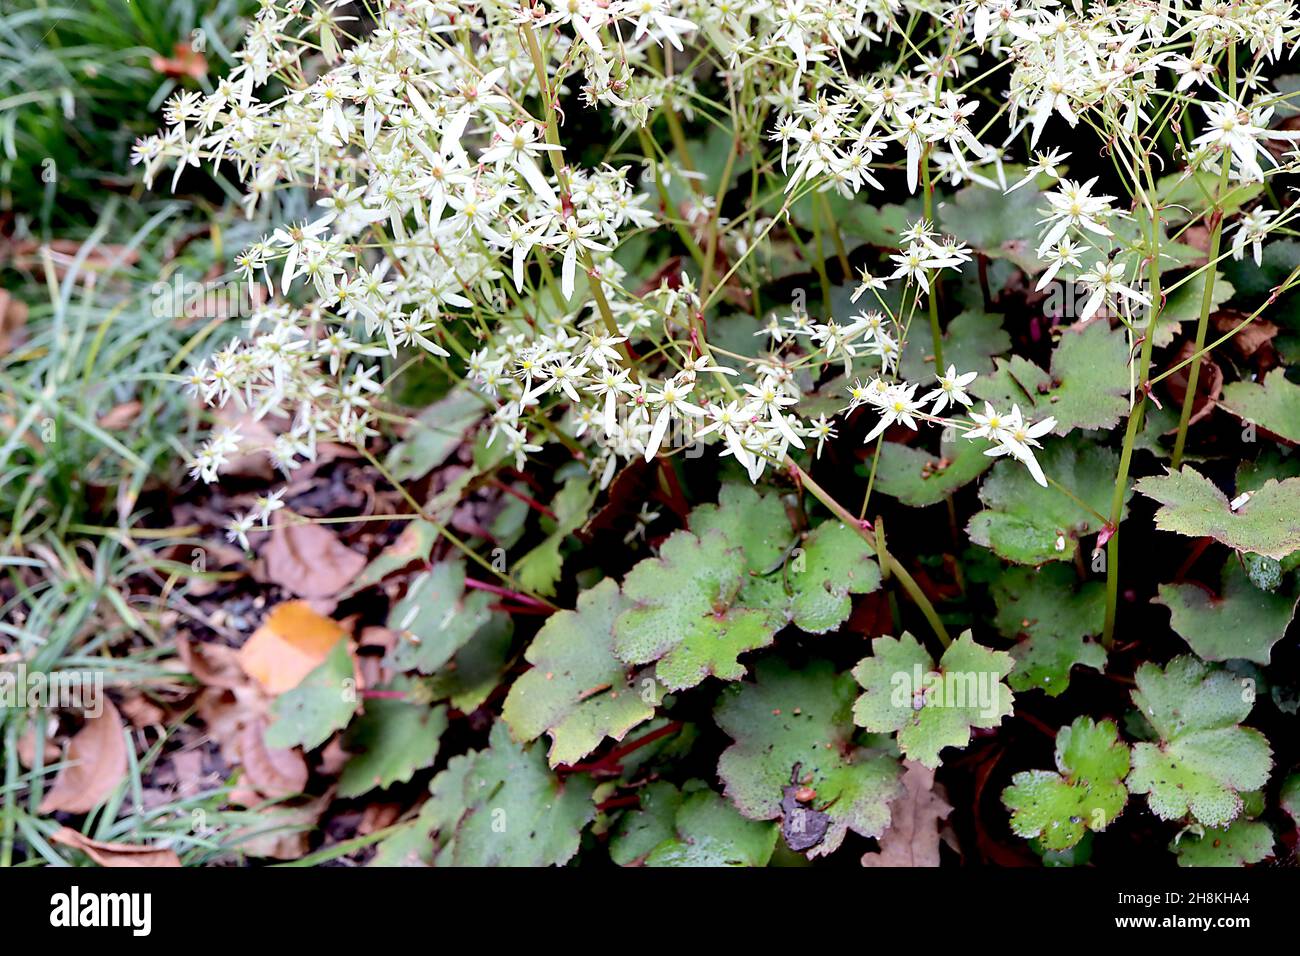 Saxifraga fortunei ‘Hanabi’ Fortunei saxifrage Hanabi - mass of airy sprays of tiny white flowers with one long petal, round lobed leaves, November,UK Stock Photo